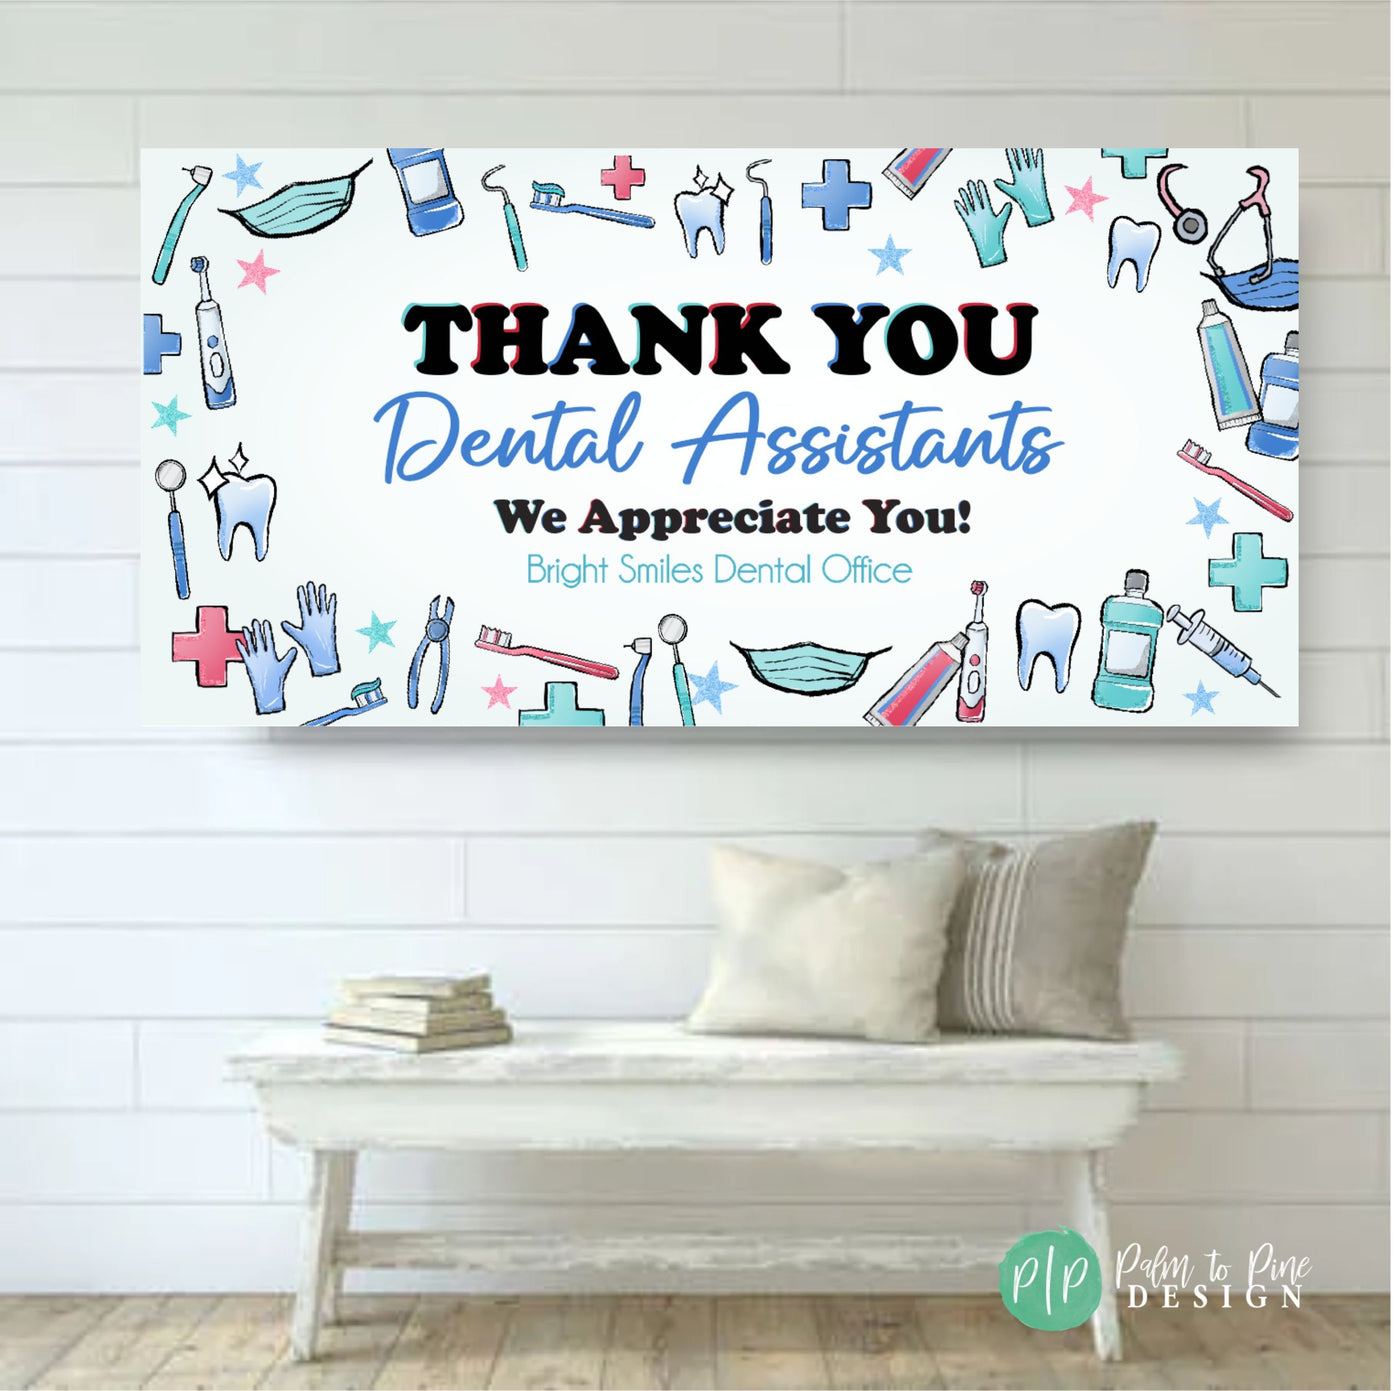 Dental Staff Appreciation Banner, Dental Assistant Appreciation Thank You Sign, Personalized Dental Appreciation Week, Dental Hygienist Week